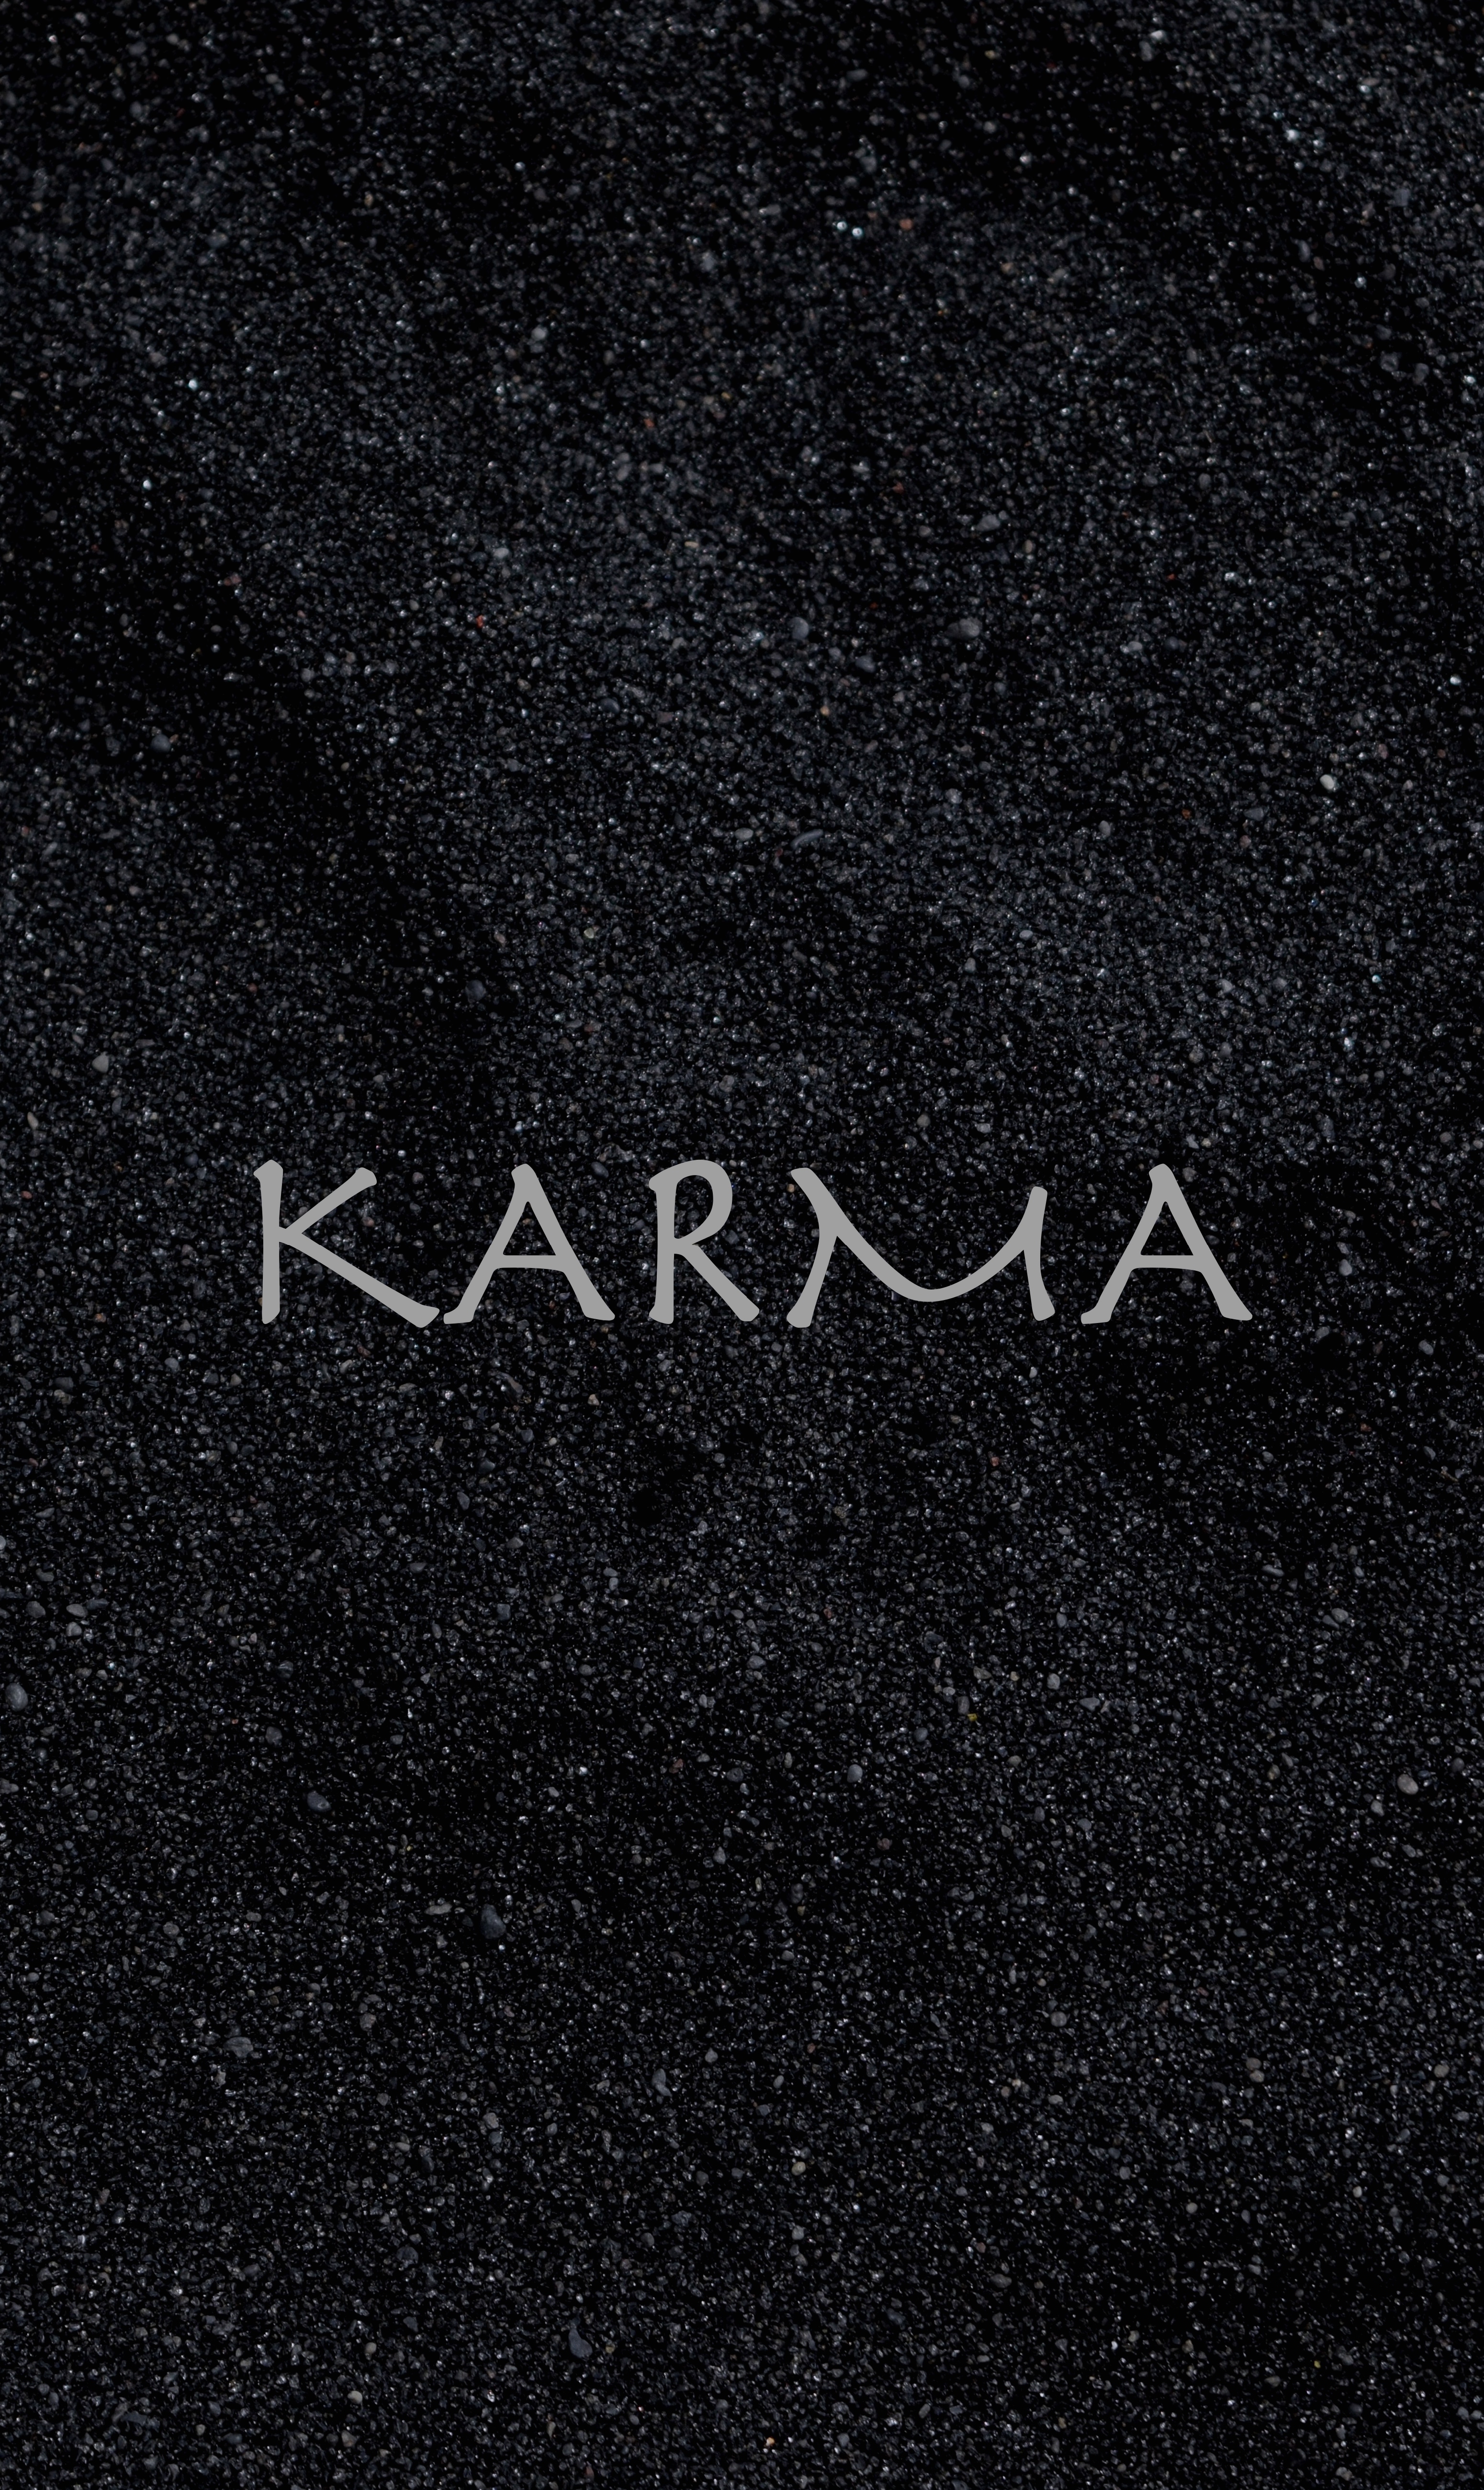 karma, sand, words, inscription, boomerang, cause, reason, consequence